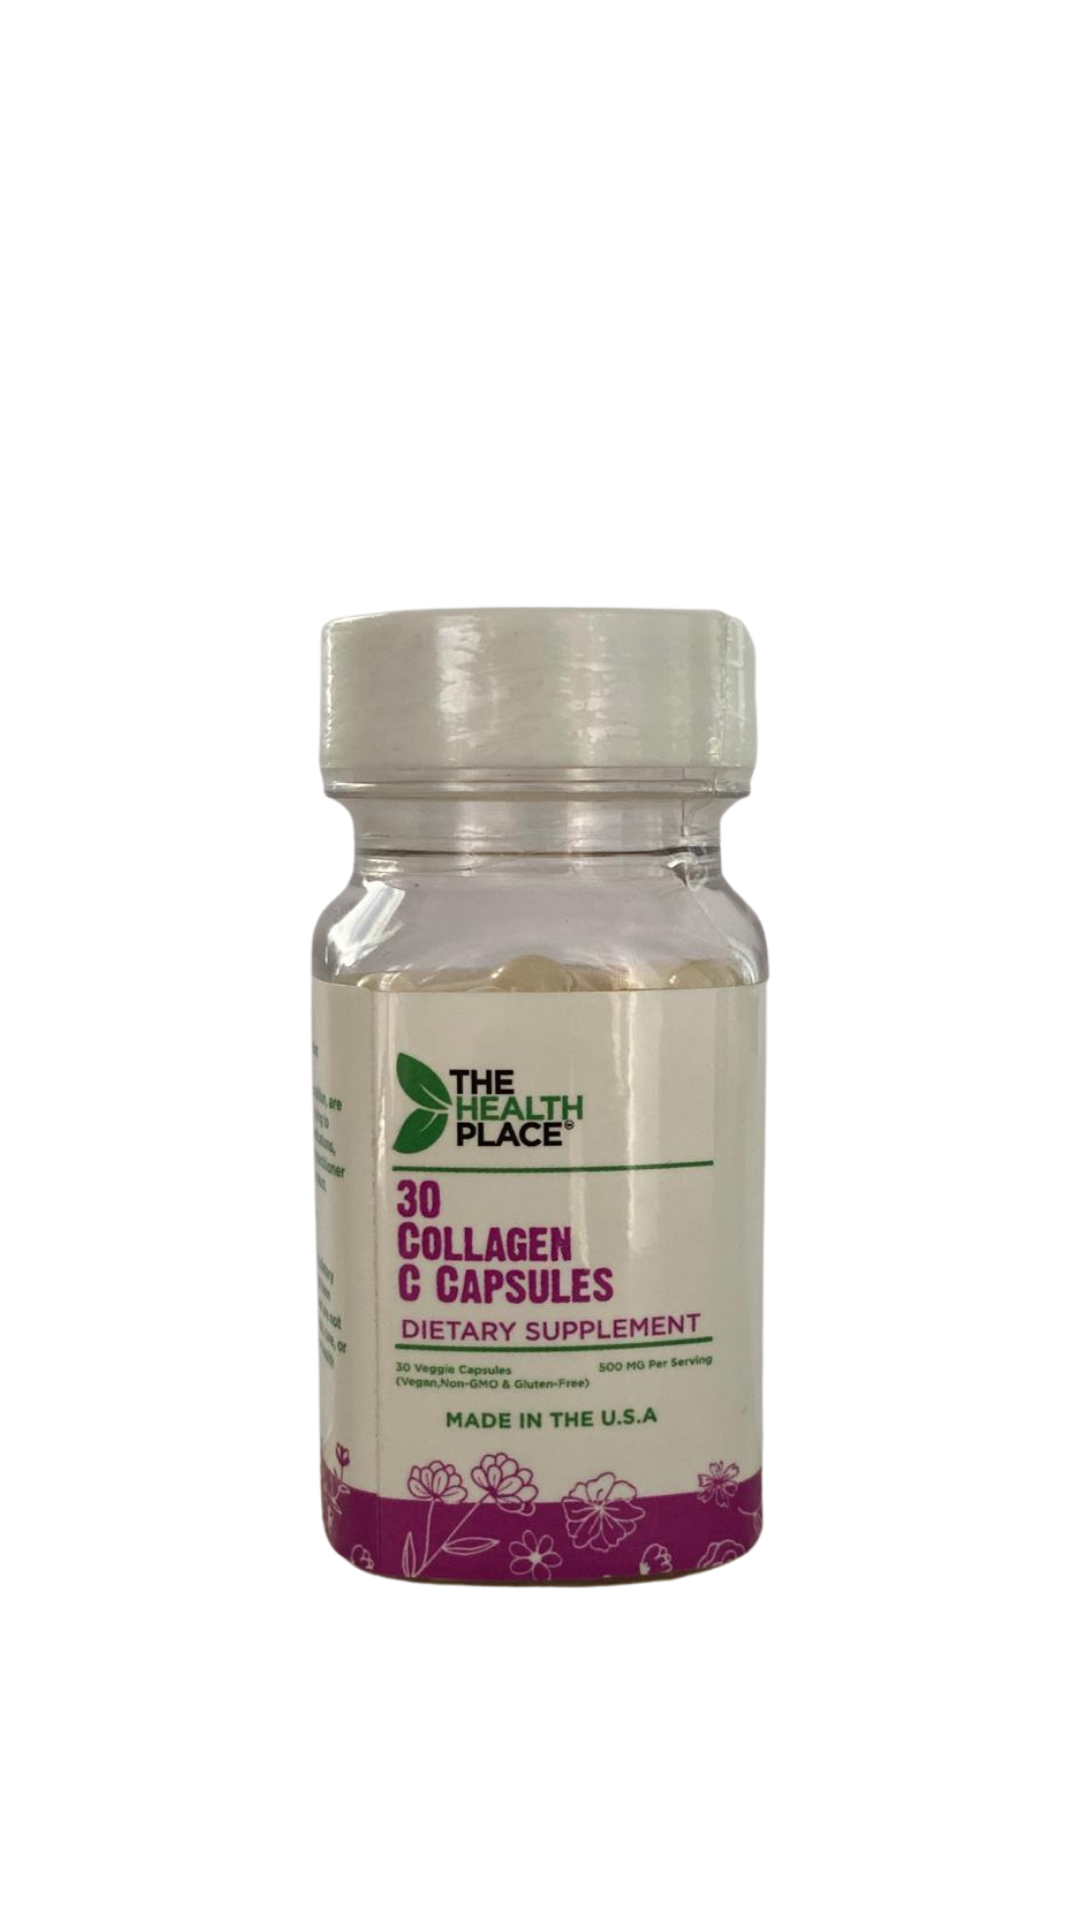 Collagen C - 30 Capsules 500mg each